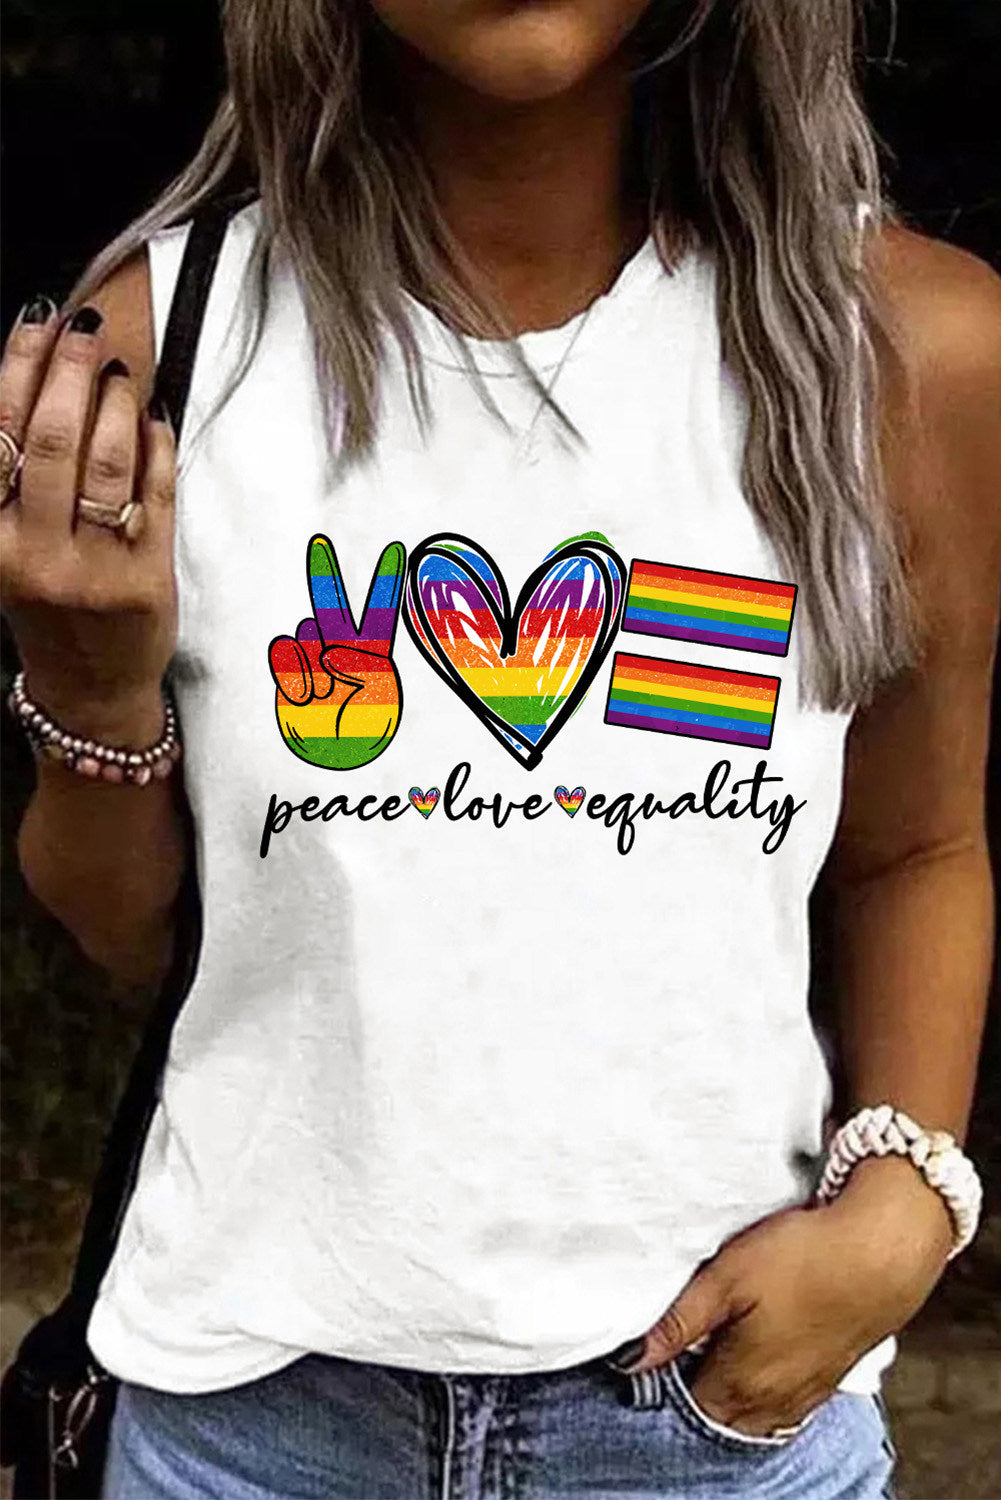 LC2569355-1-S, LC2569355-1-M, LC2569355-1-L, LC2569355-1-XL, LC2569355-1-2XL, White Women Rainbow LGBT Peace Love Equality Tank Tops Gay Pride Sleeveless Shirt